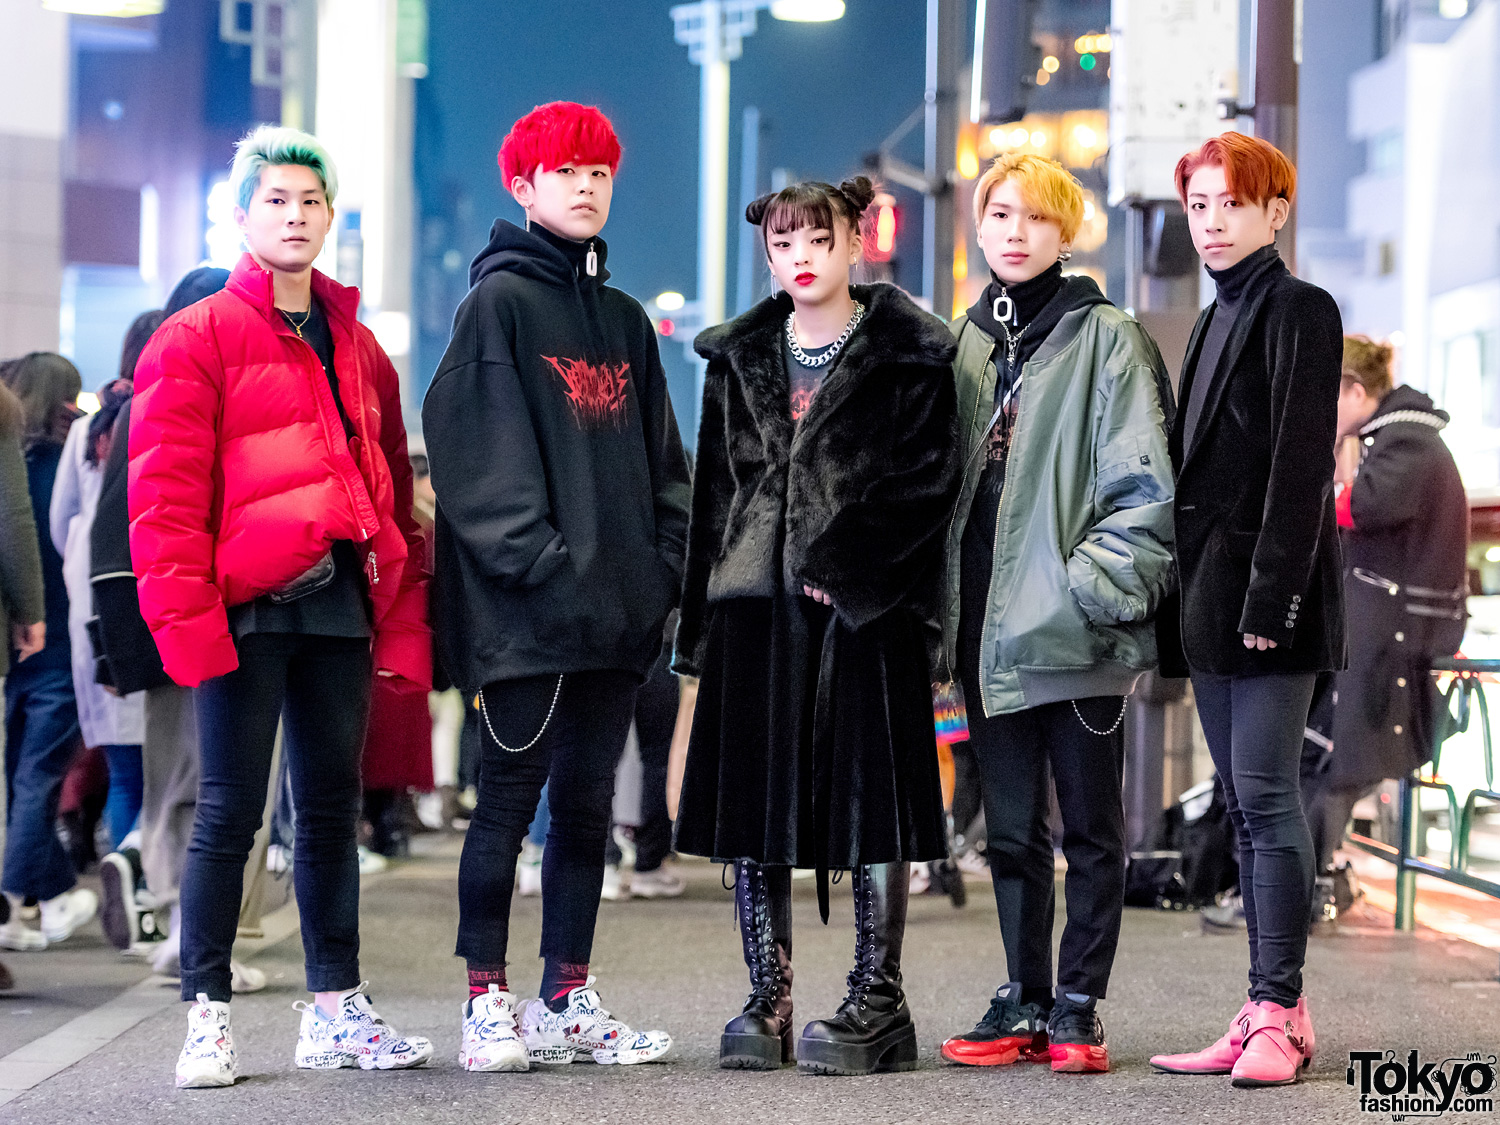 Harajuku Teen Street Style Squad w/ Balenciaga, Raf, Demonia & Vetements